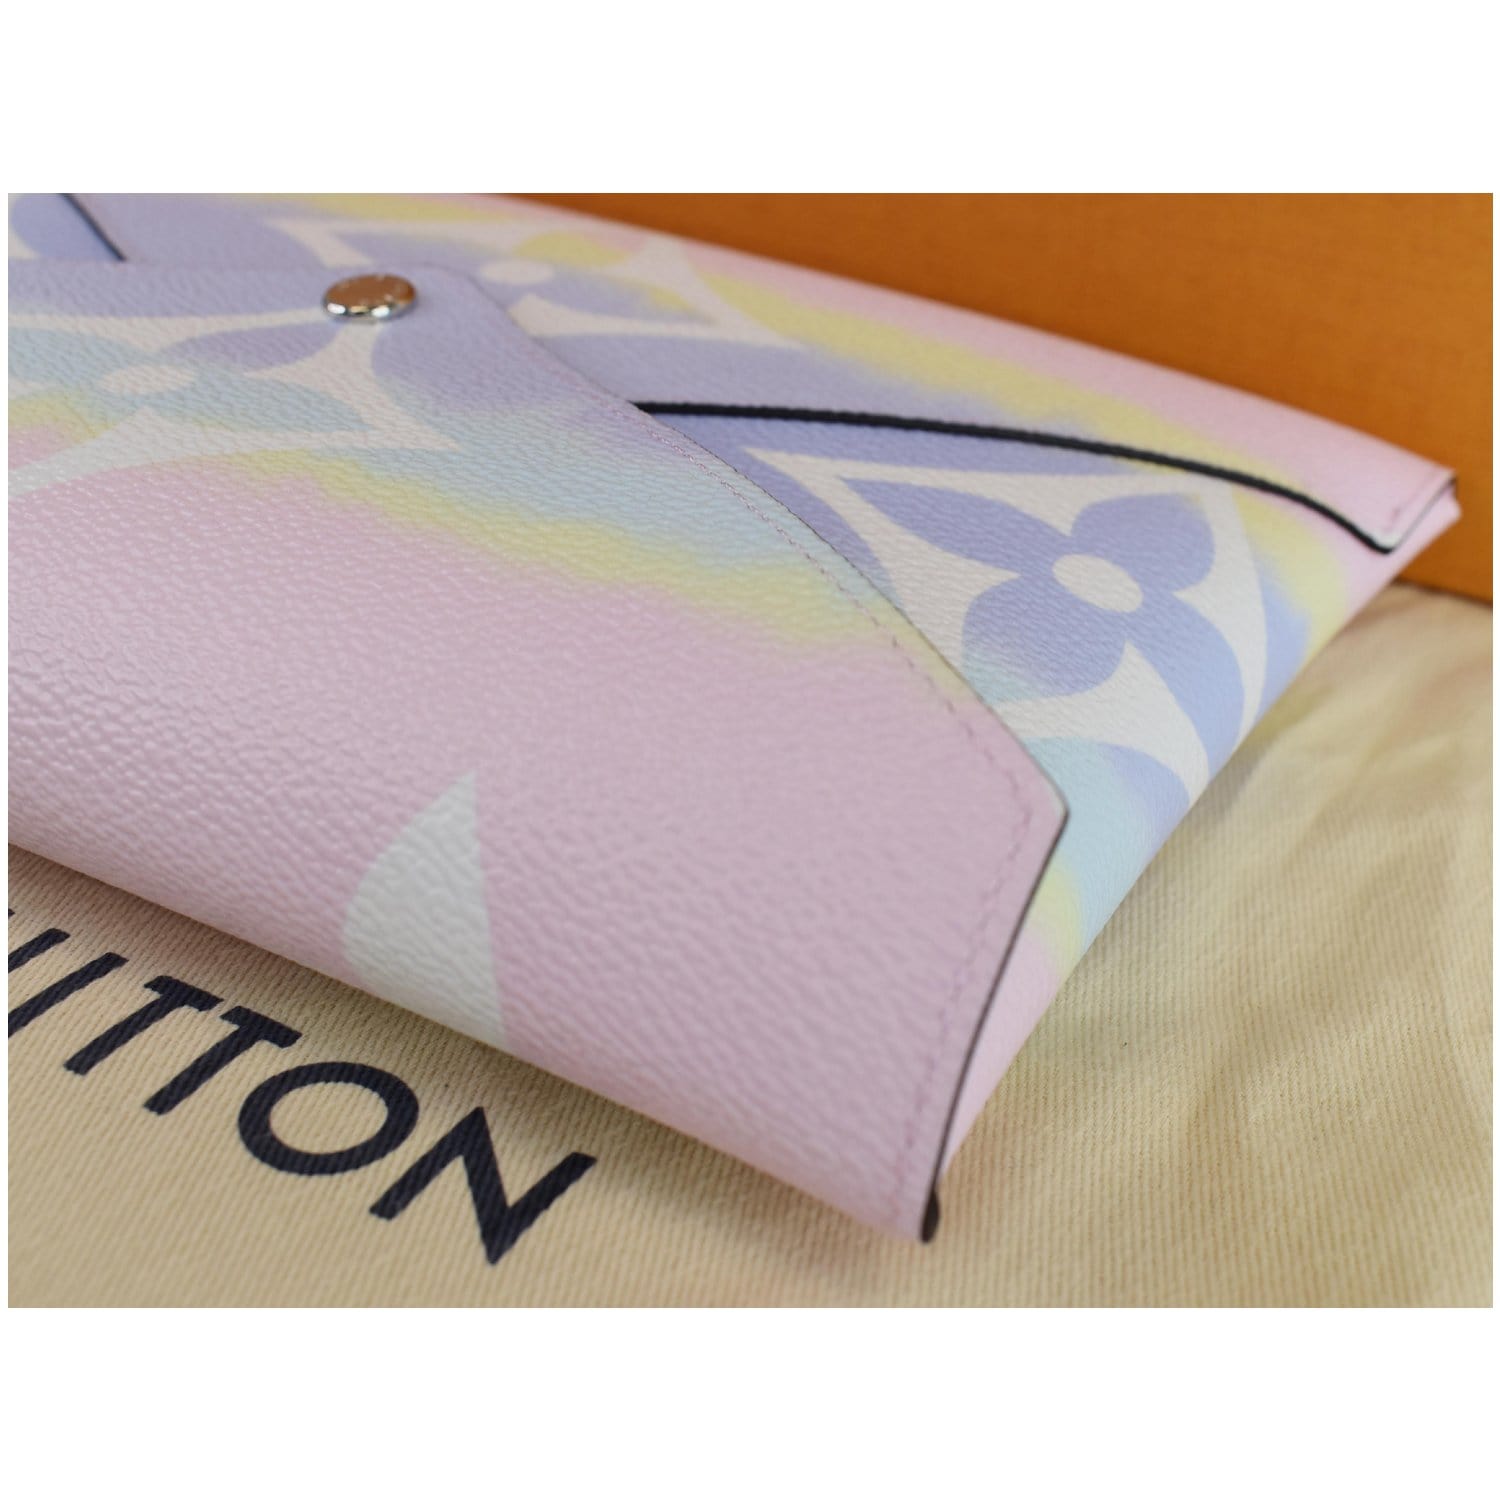 Louis Vuitton Escale Pochette Kirigami PM w/ tags